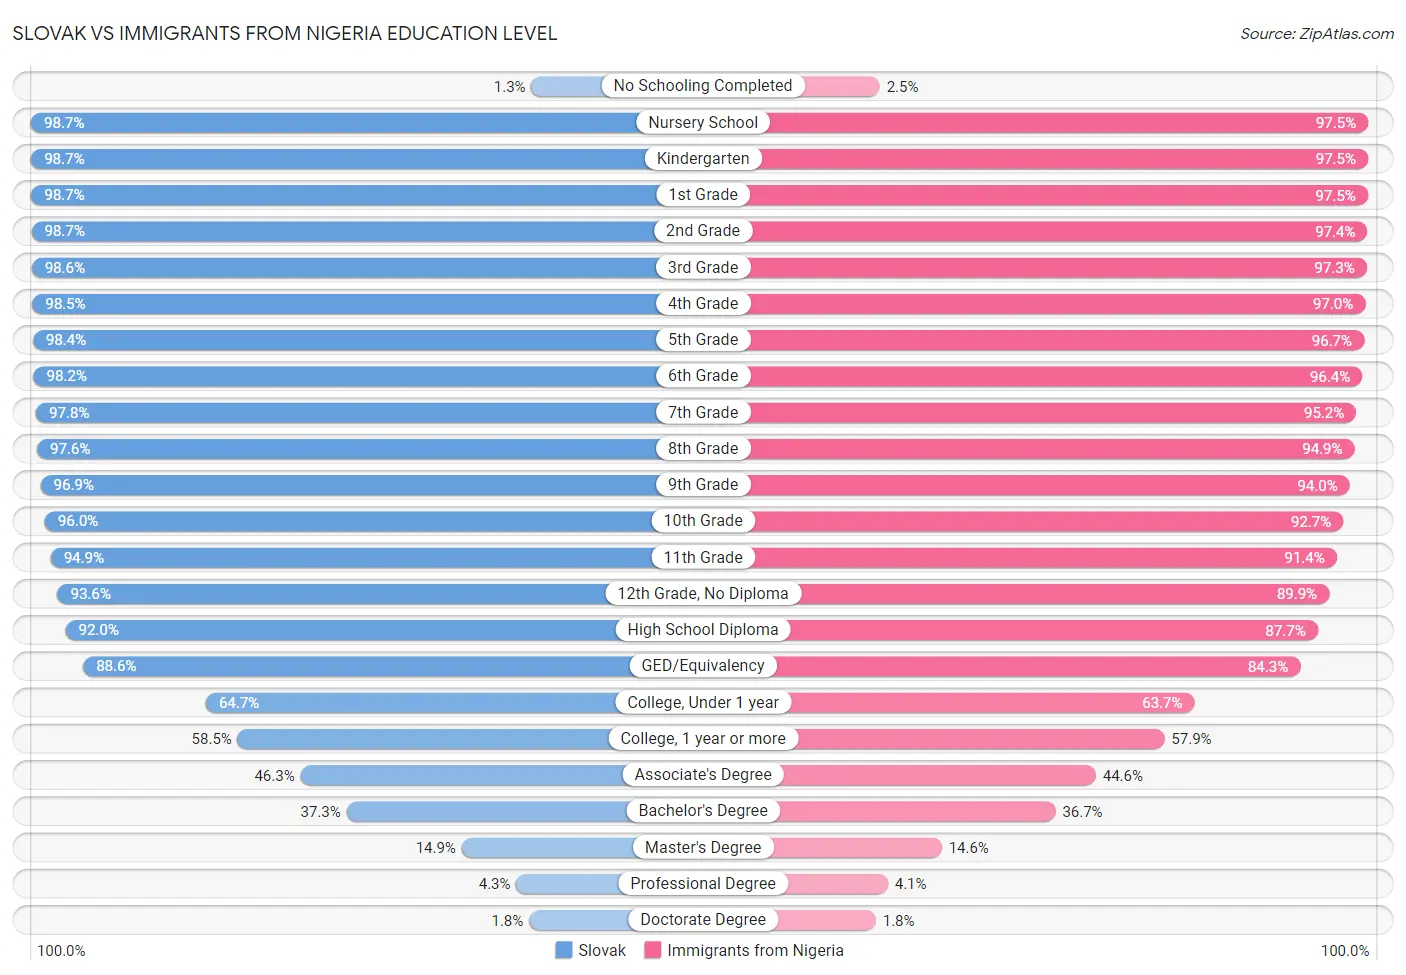 Slovak vs Immigrants from Nigeria Education Level